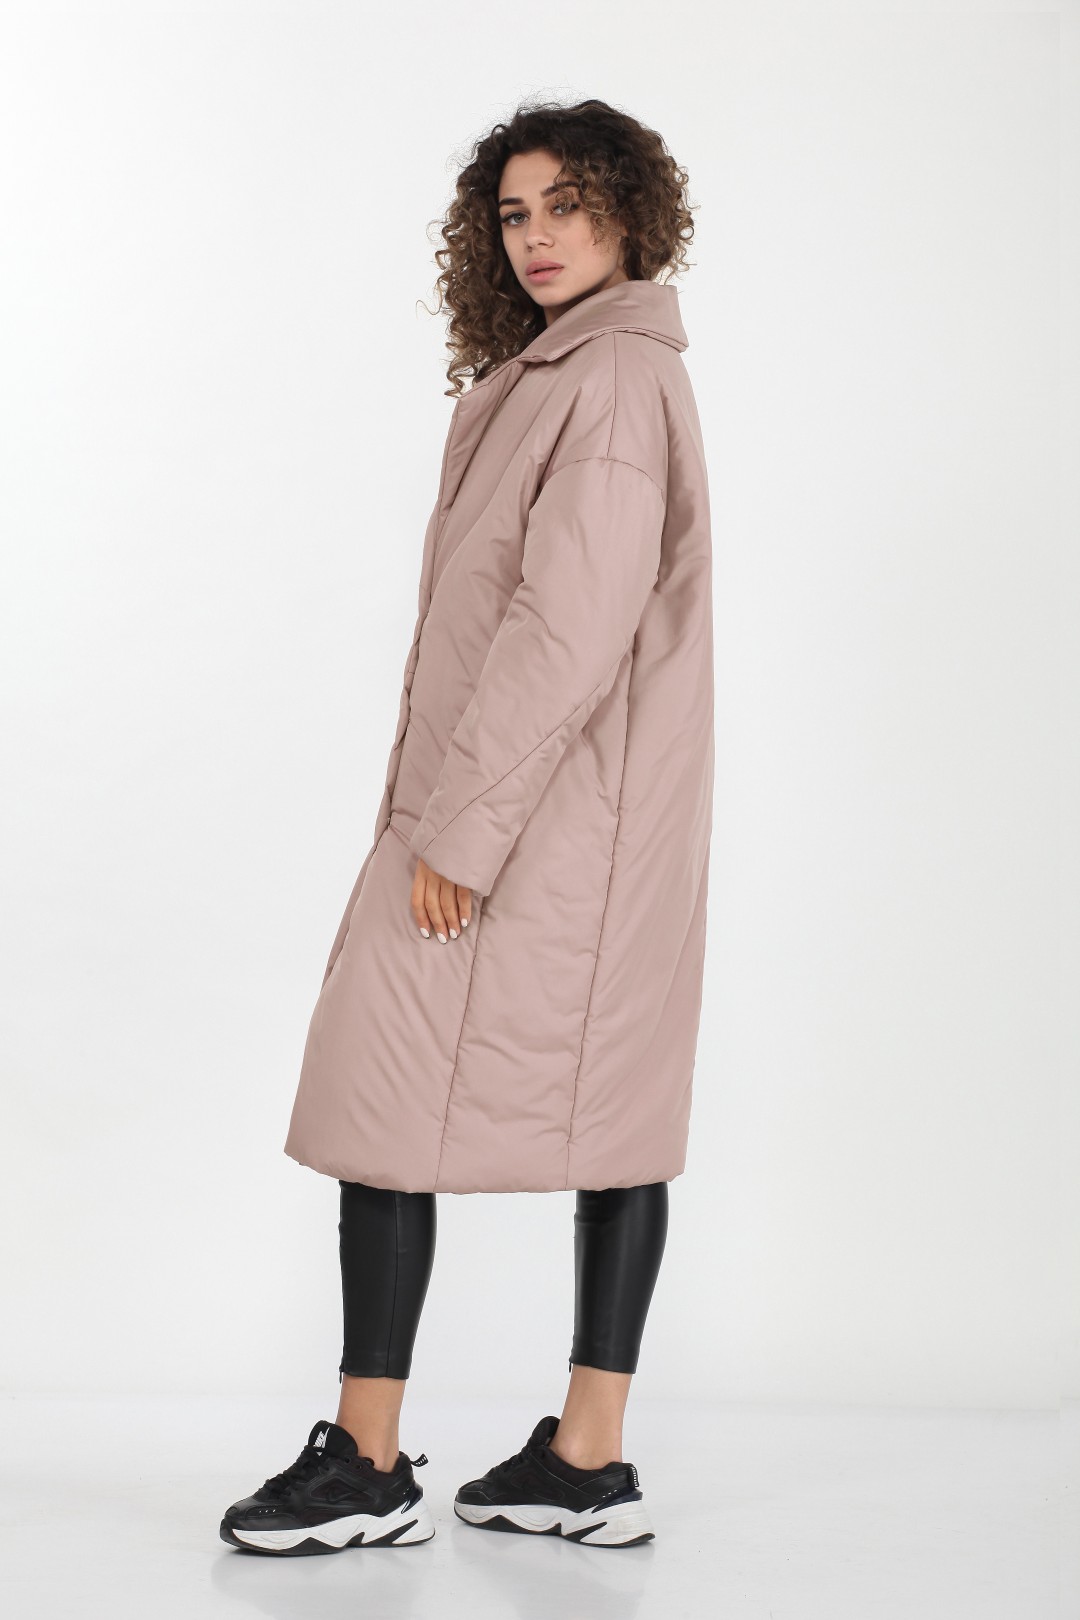 Пальто DOGGI 6300 бежево-розовый